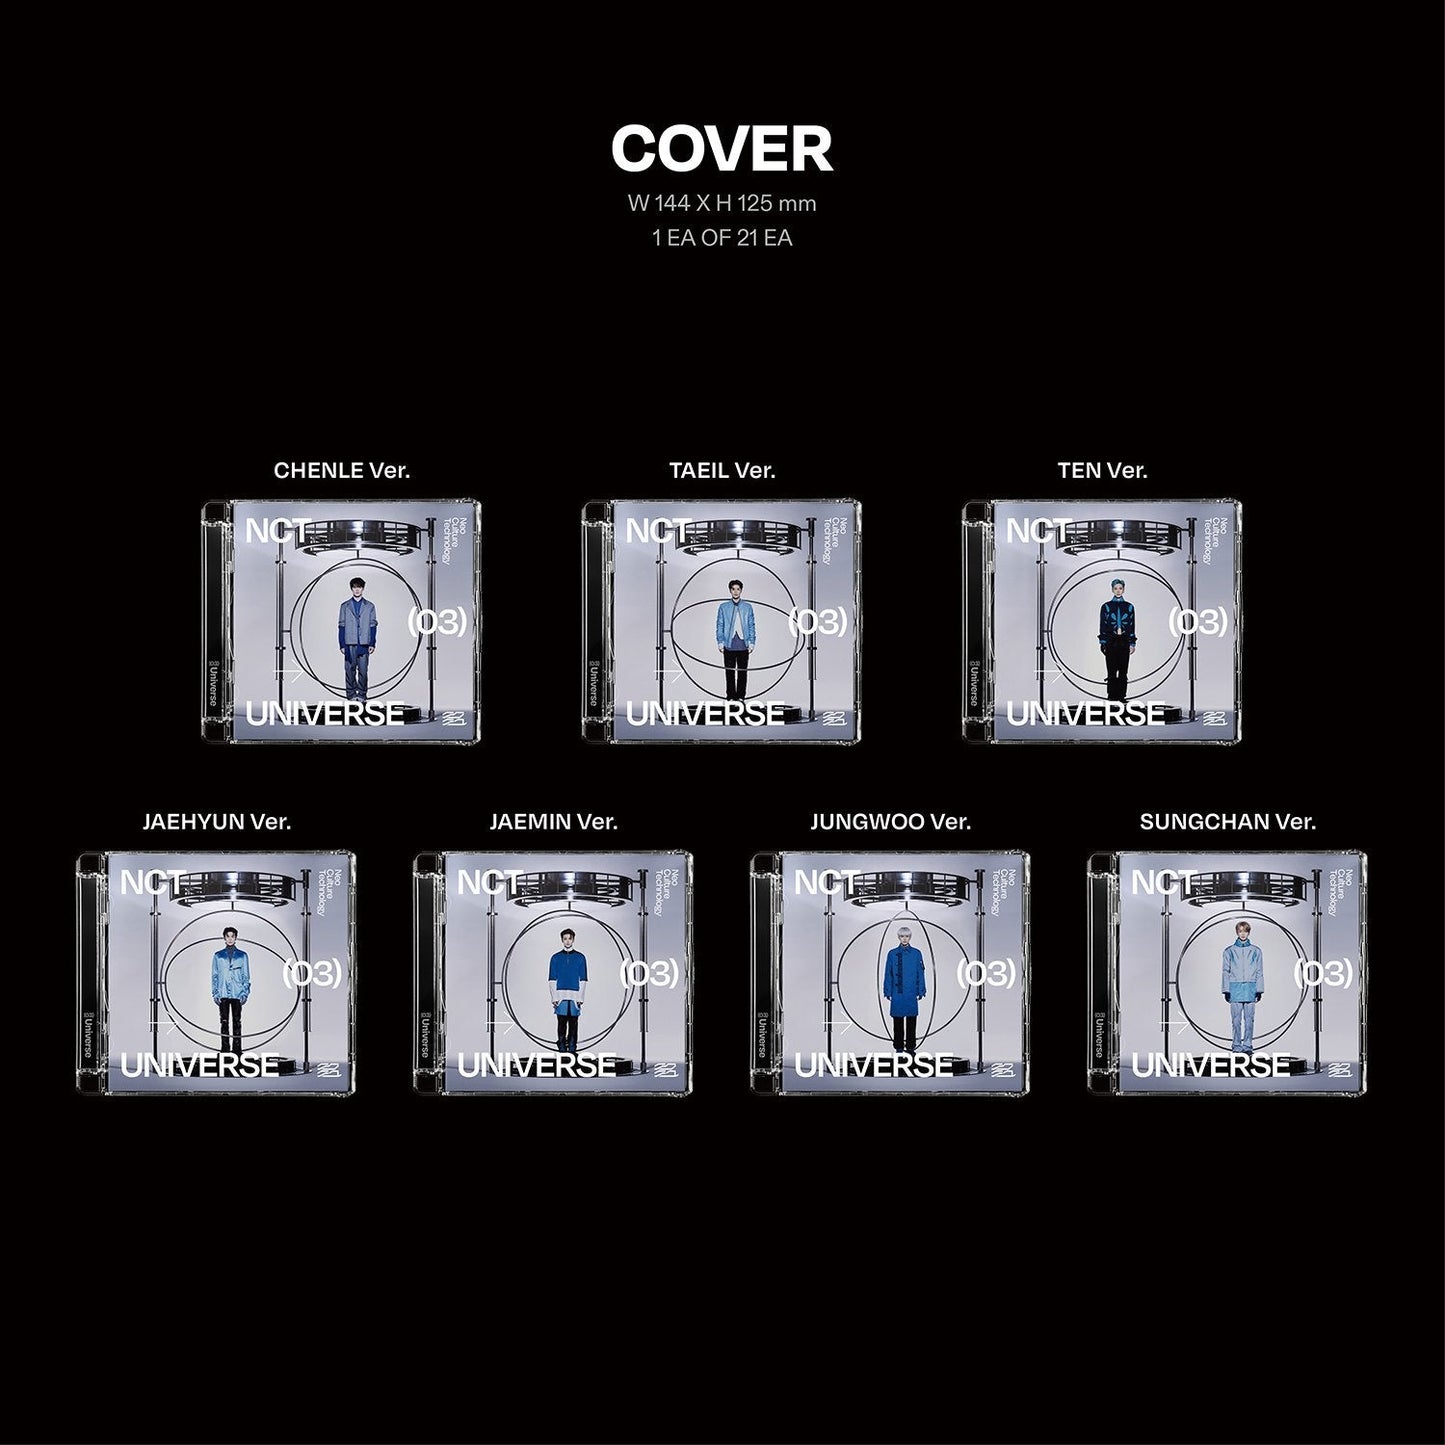 NCT - The 3rd Album 'Universe' (Jewel Case Version)